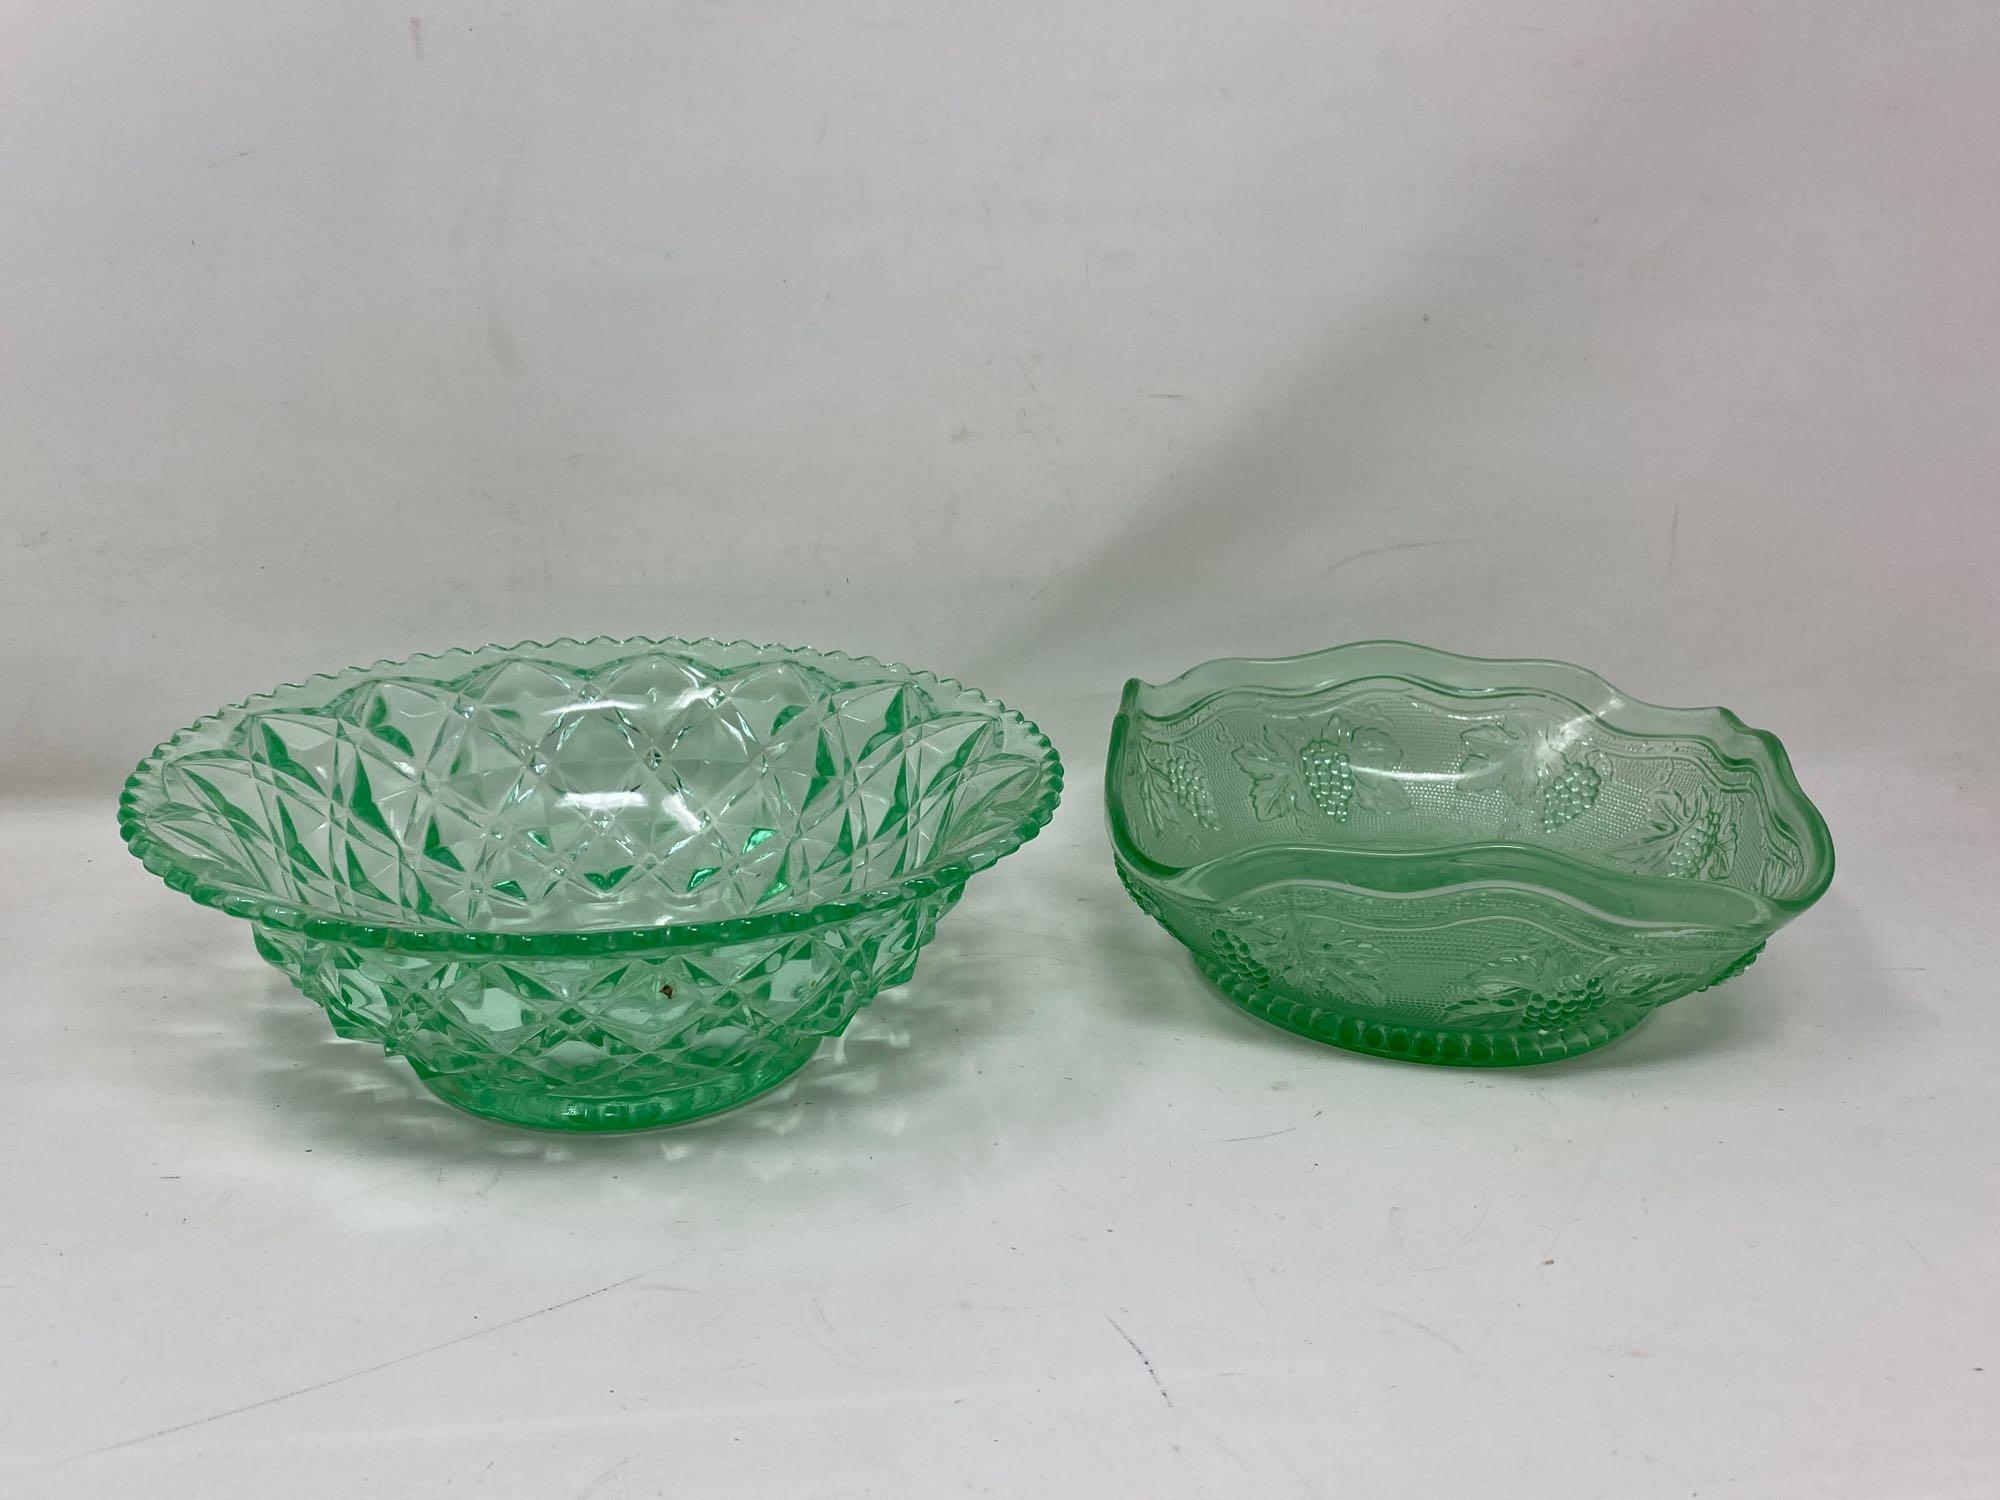 5 Colored Glass Vintage or Depression Era Type Bowls